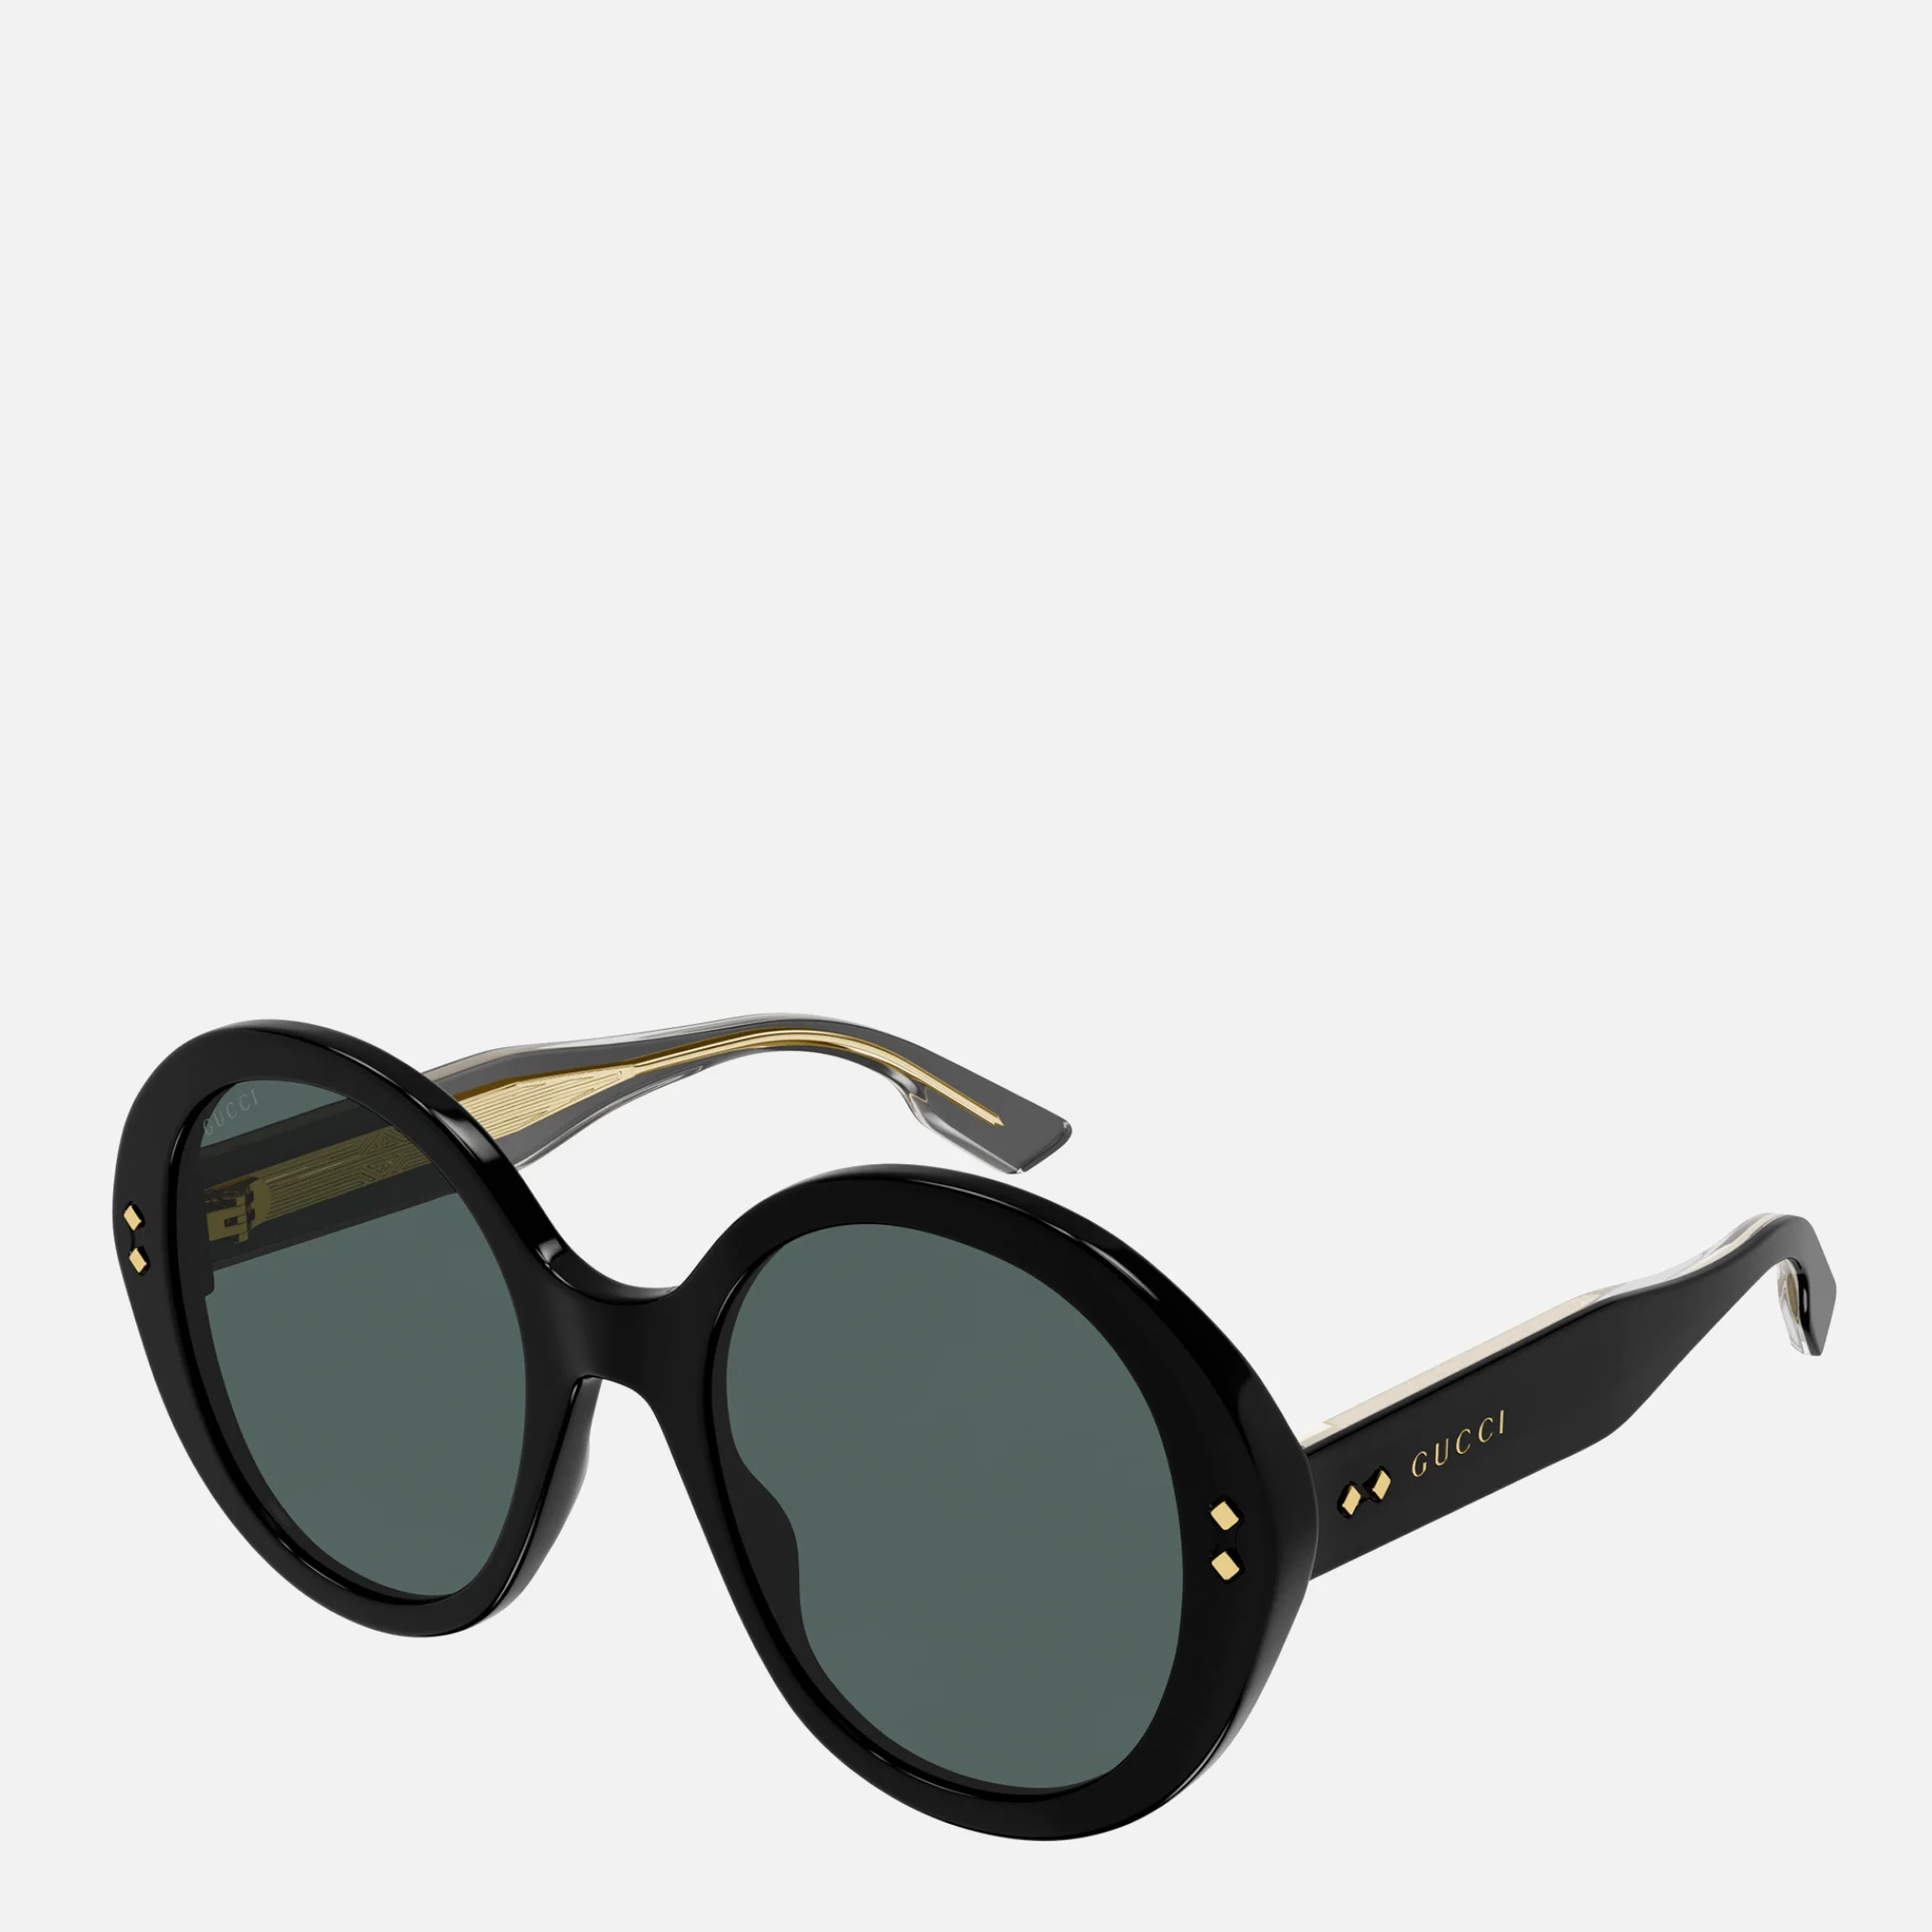 Gucci Women's Oversized Round Acetate Sunglasses - Black/Black/Grey Image 1